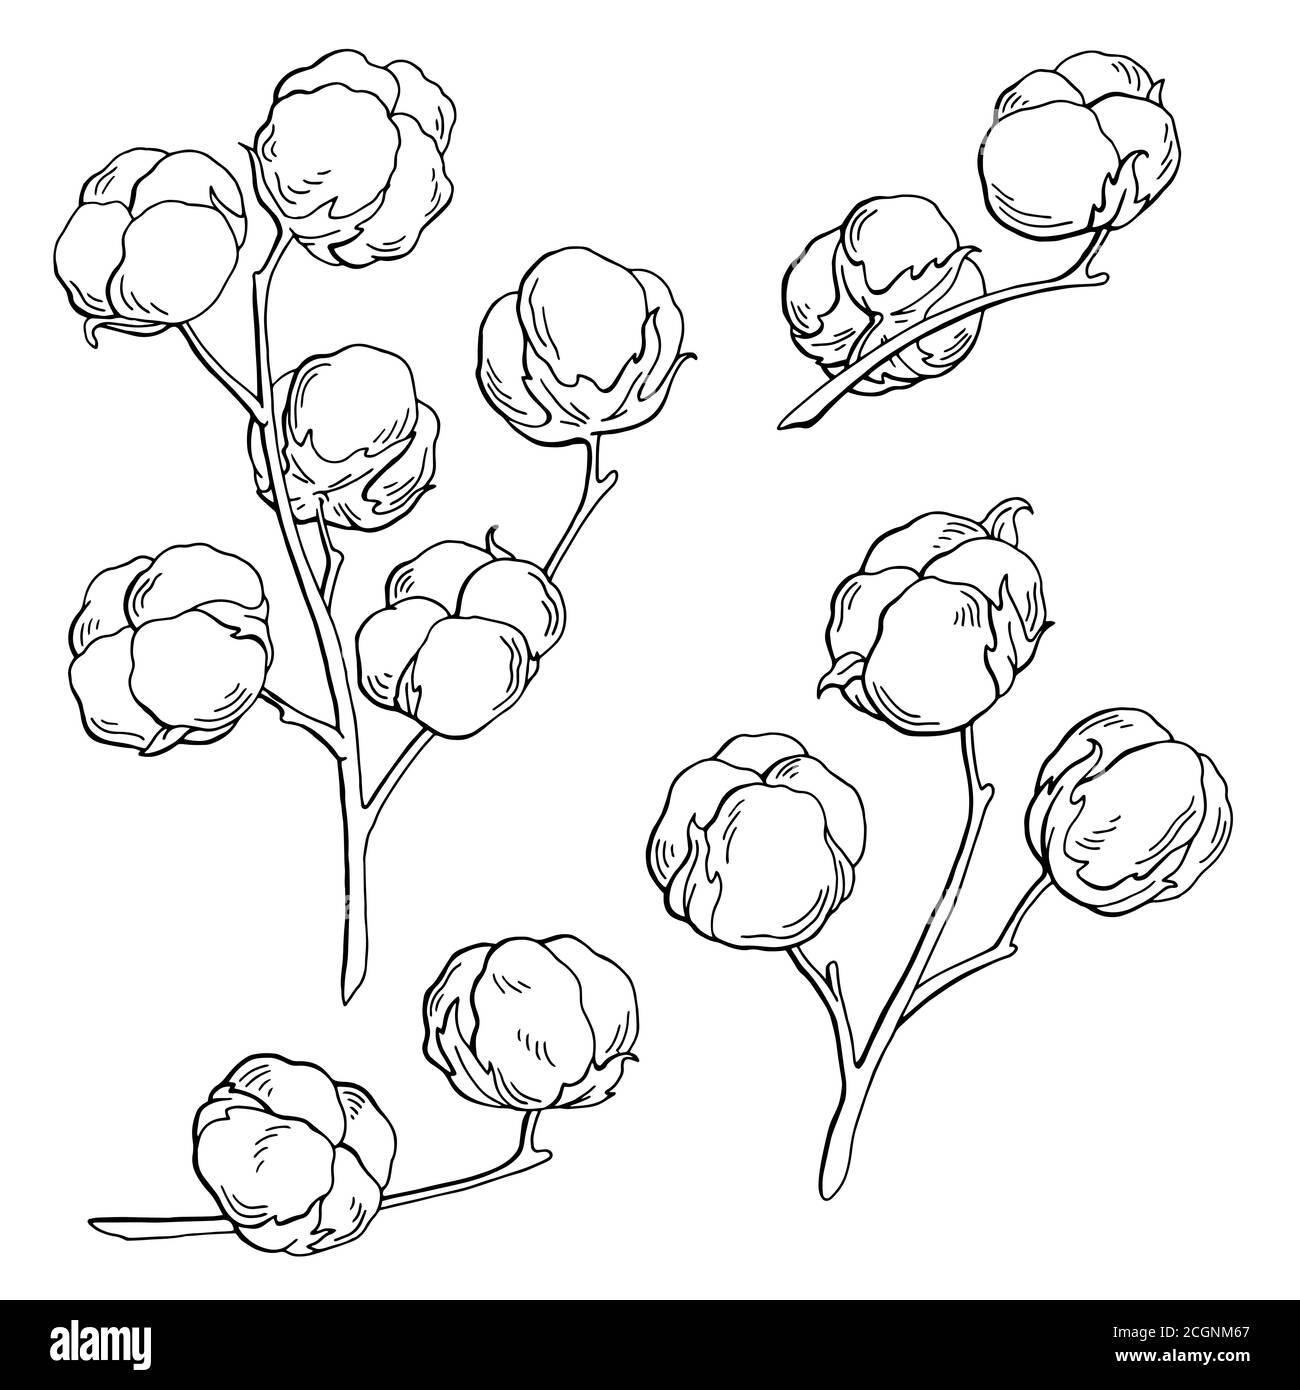 Cotton plant stock illustration. Illustration of retro - 100164302